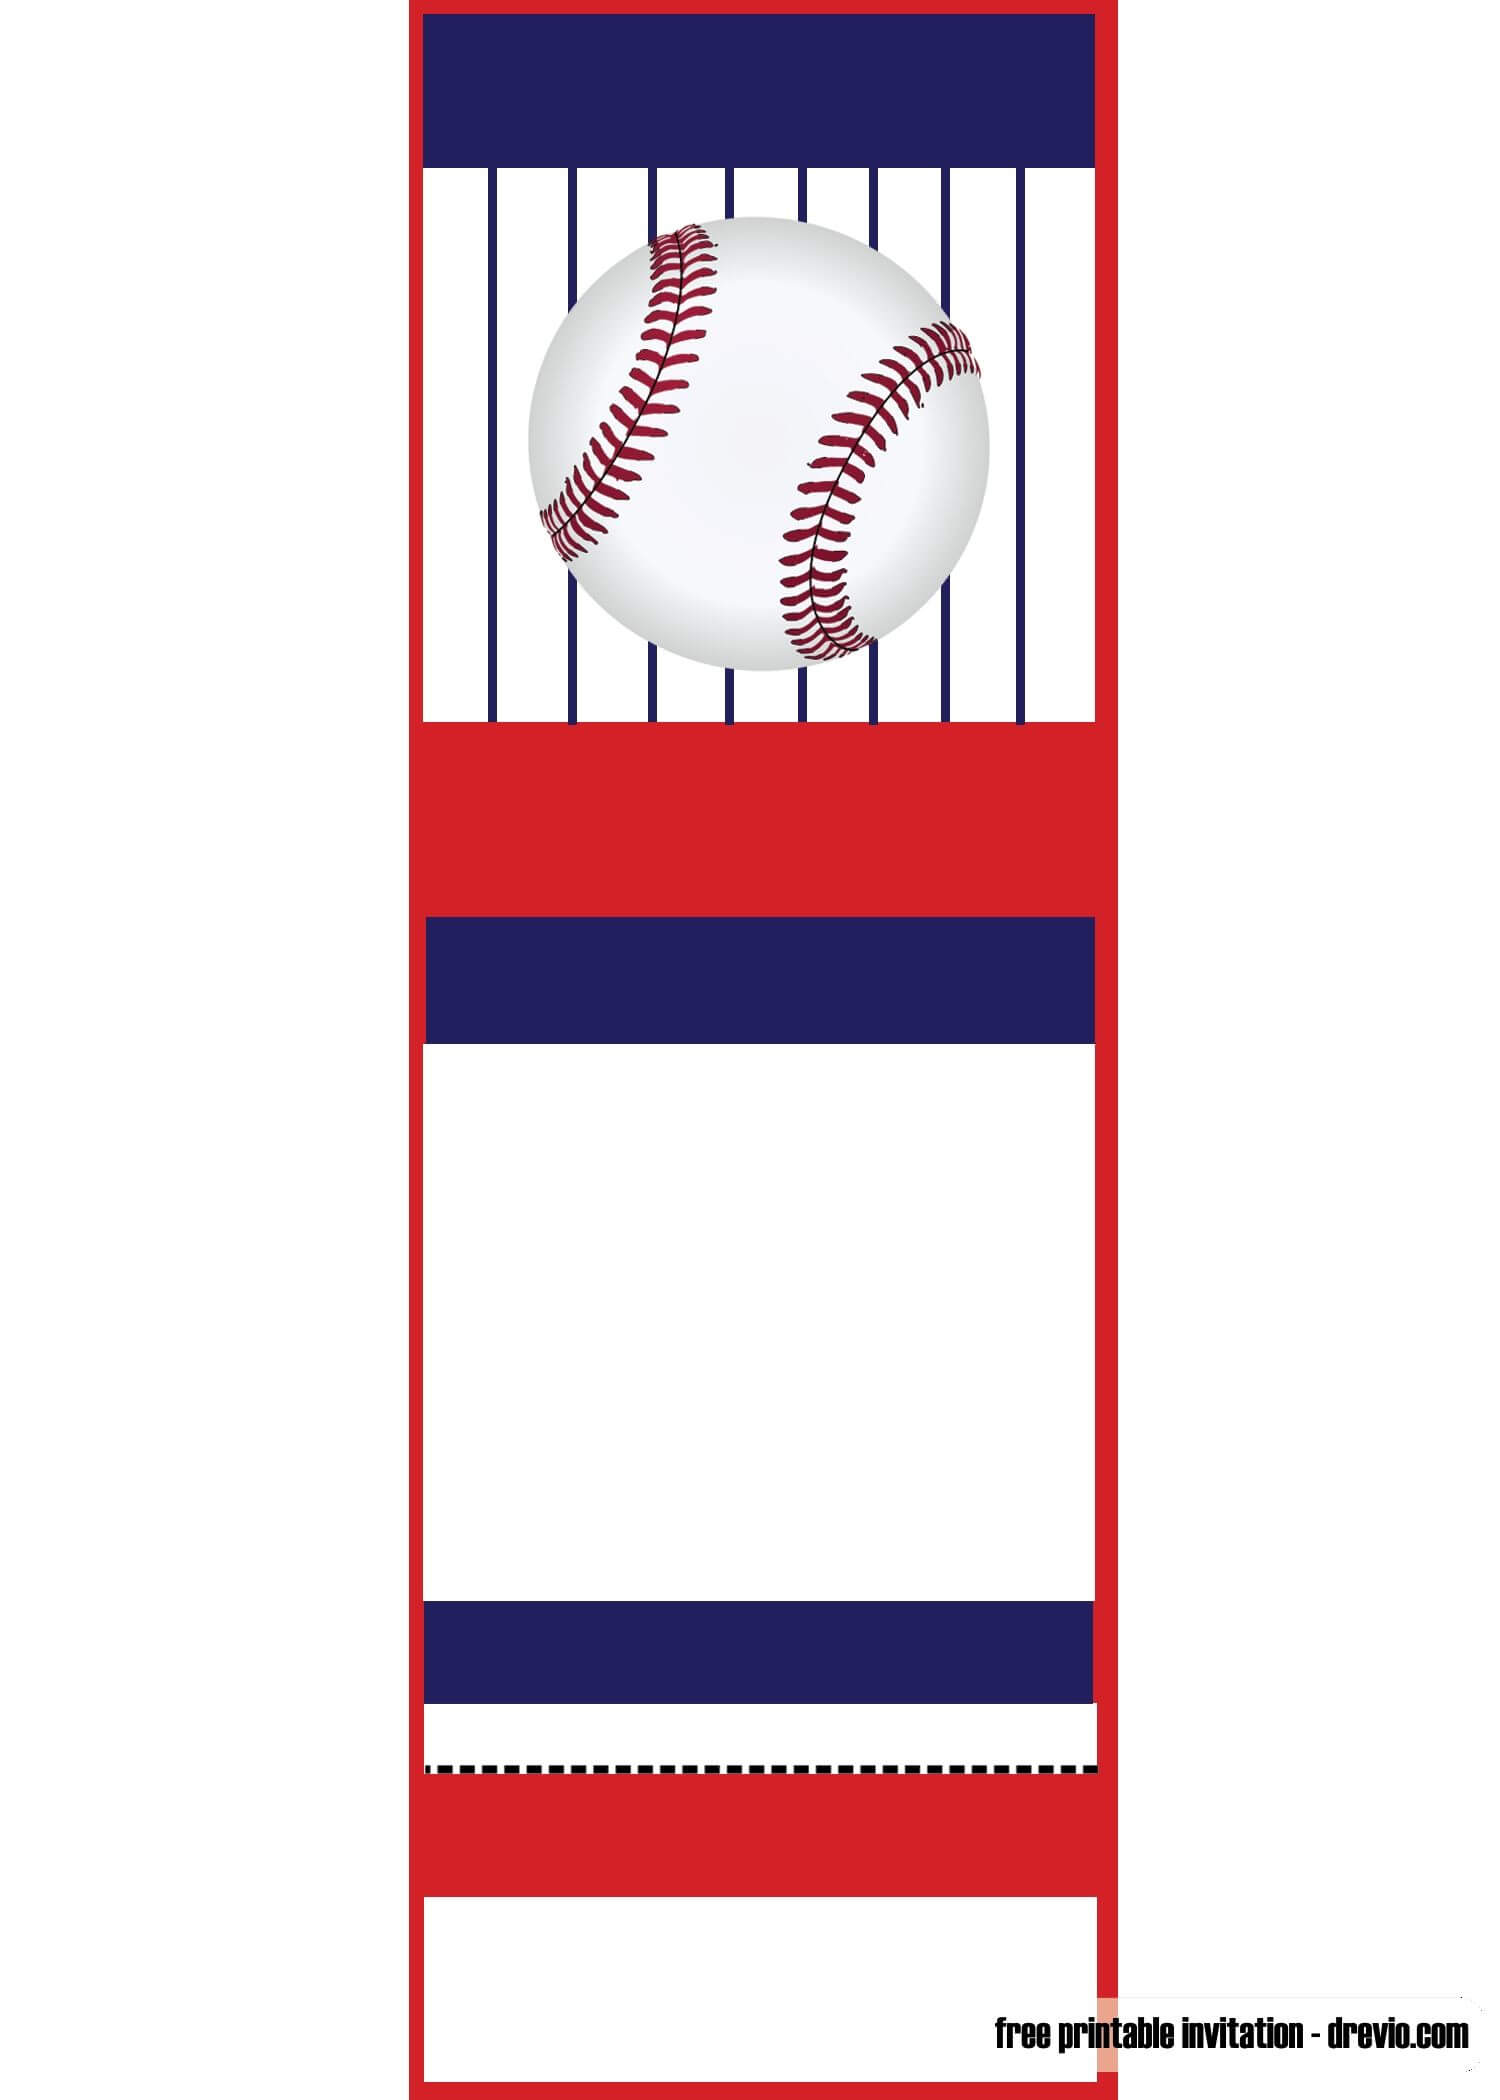 024 Template Ideas Baseball Card Beautiful Word Size Trading Intended For Baseball Card Size Template